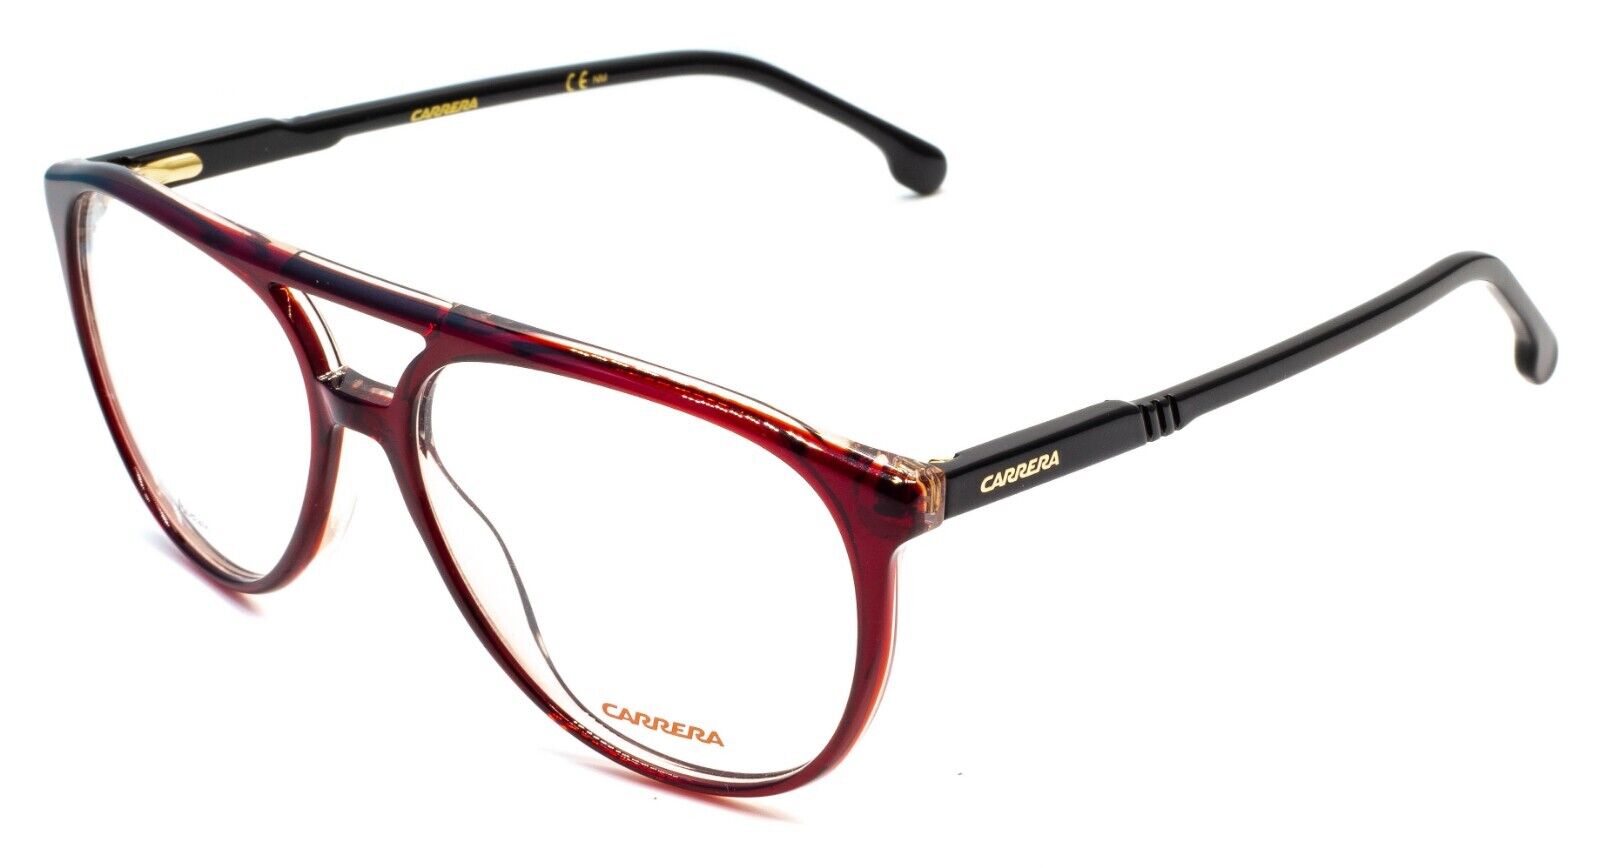 CARRERA 1124 C9A 54mm Eyewear FRAMES Glasses RX Optical Eyeglasses New -  Italy - GGV Eyewear